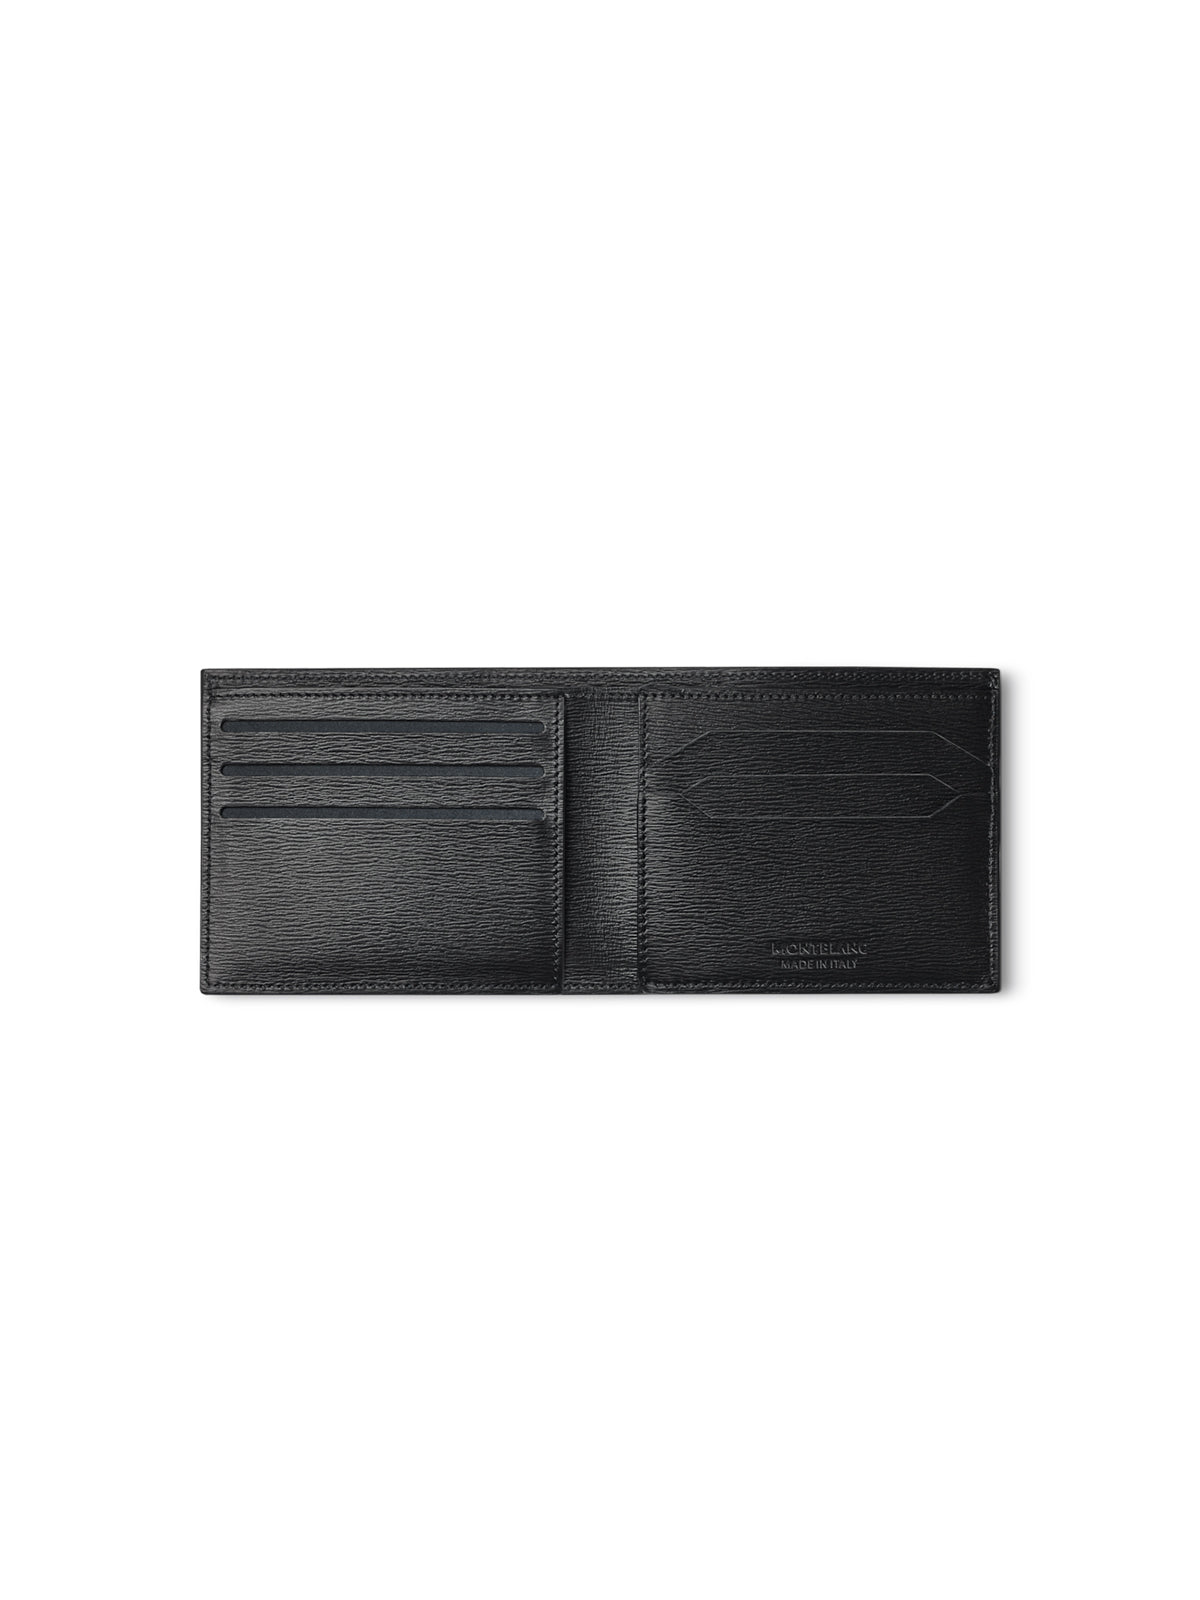 Montblanc Meisterstuck Black Leather Wallet MB129242